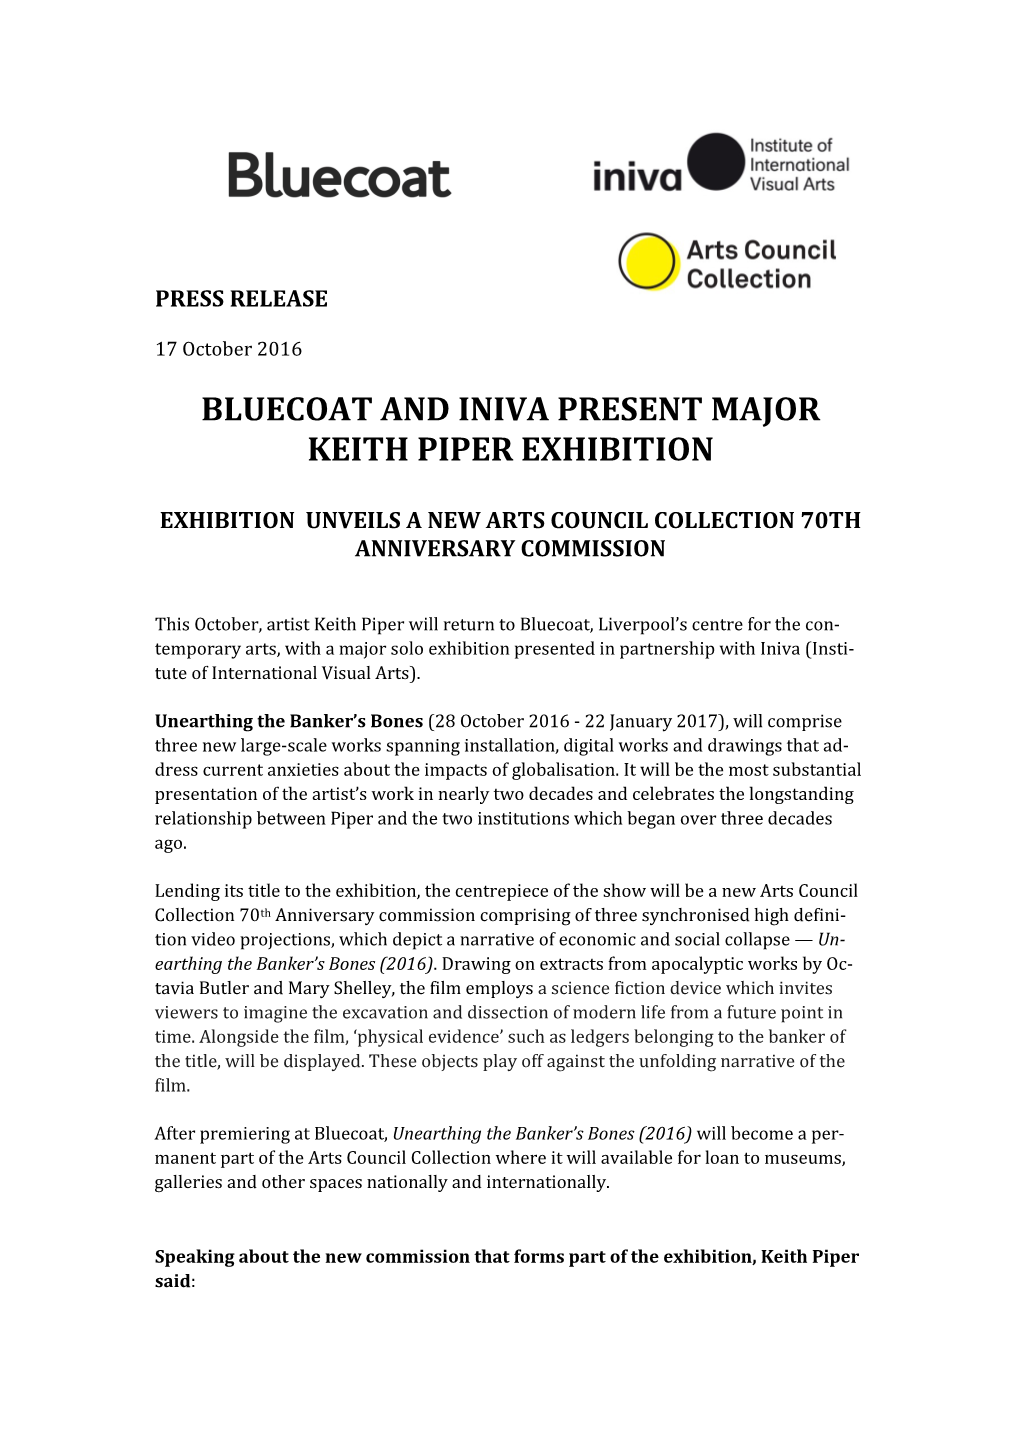 Bluecoat and Iniva Present Major Keith Piper Exhibition Press Release